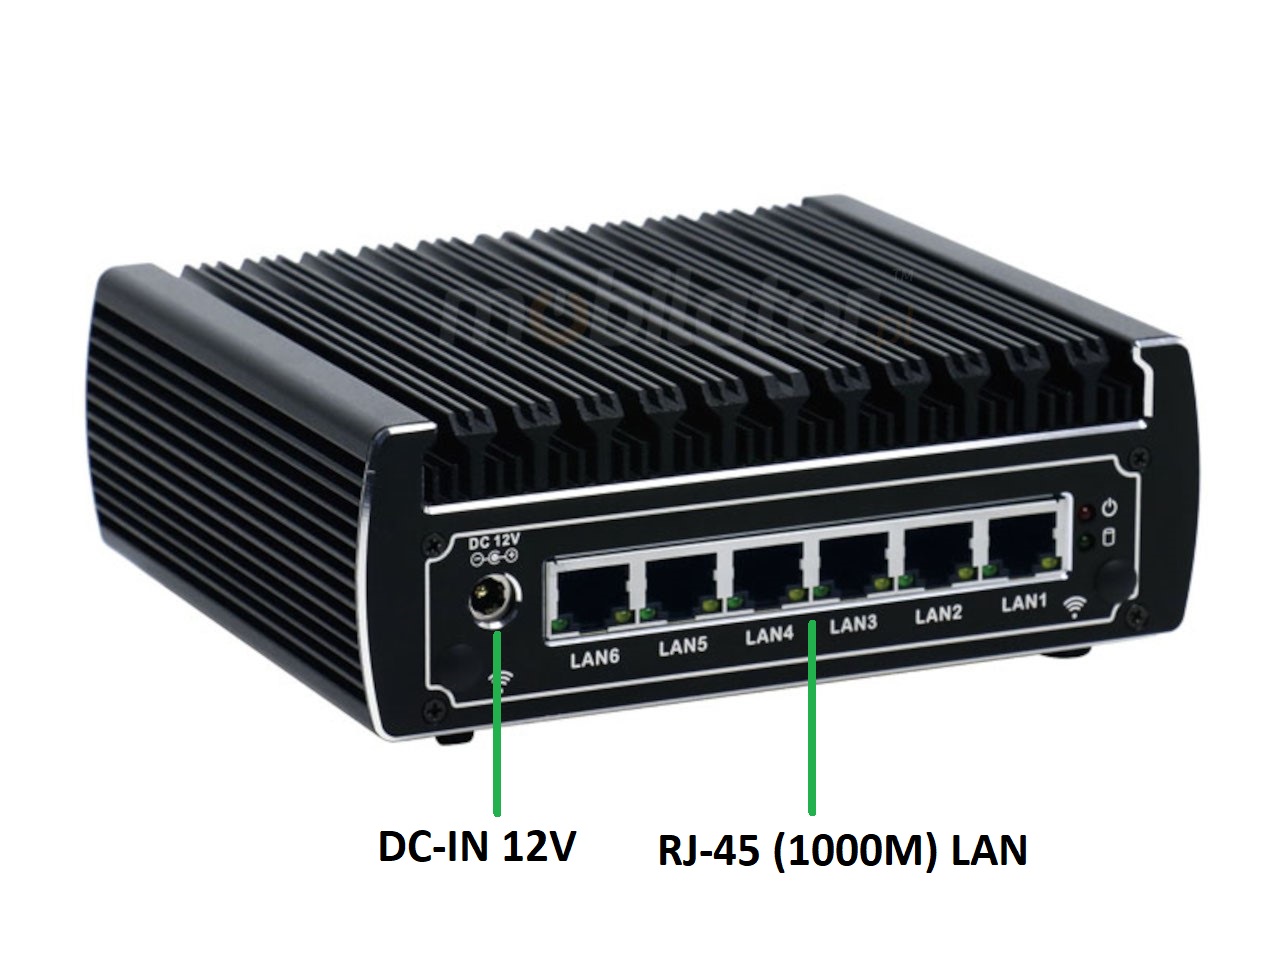   IBOX N133 porty - ty, may szybki niezawodny SSD intel wifi bluetooth fanless industrial small LAN i3